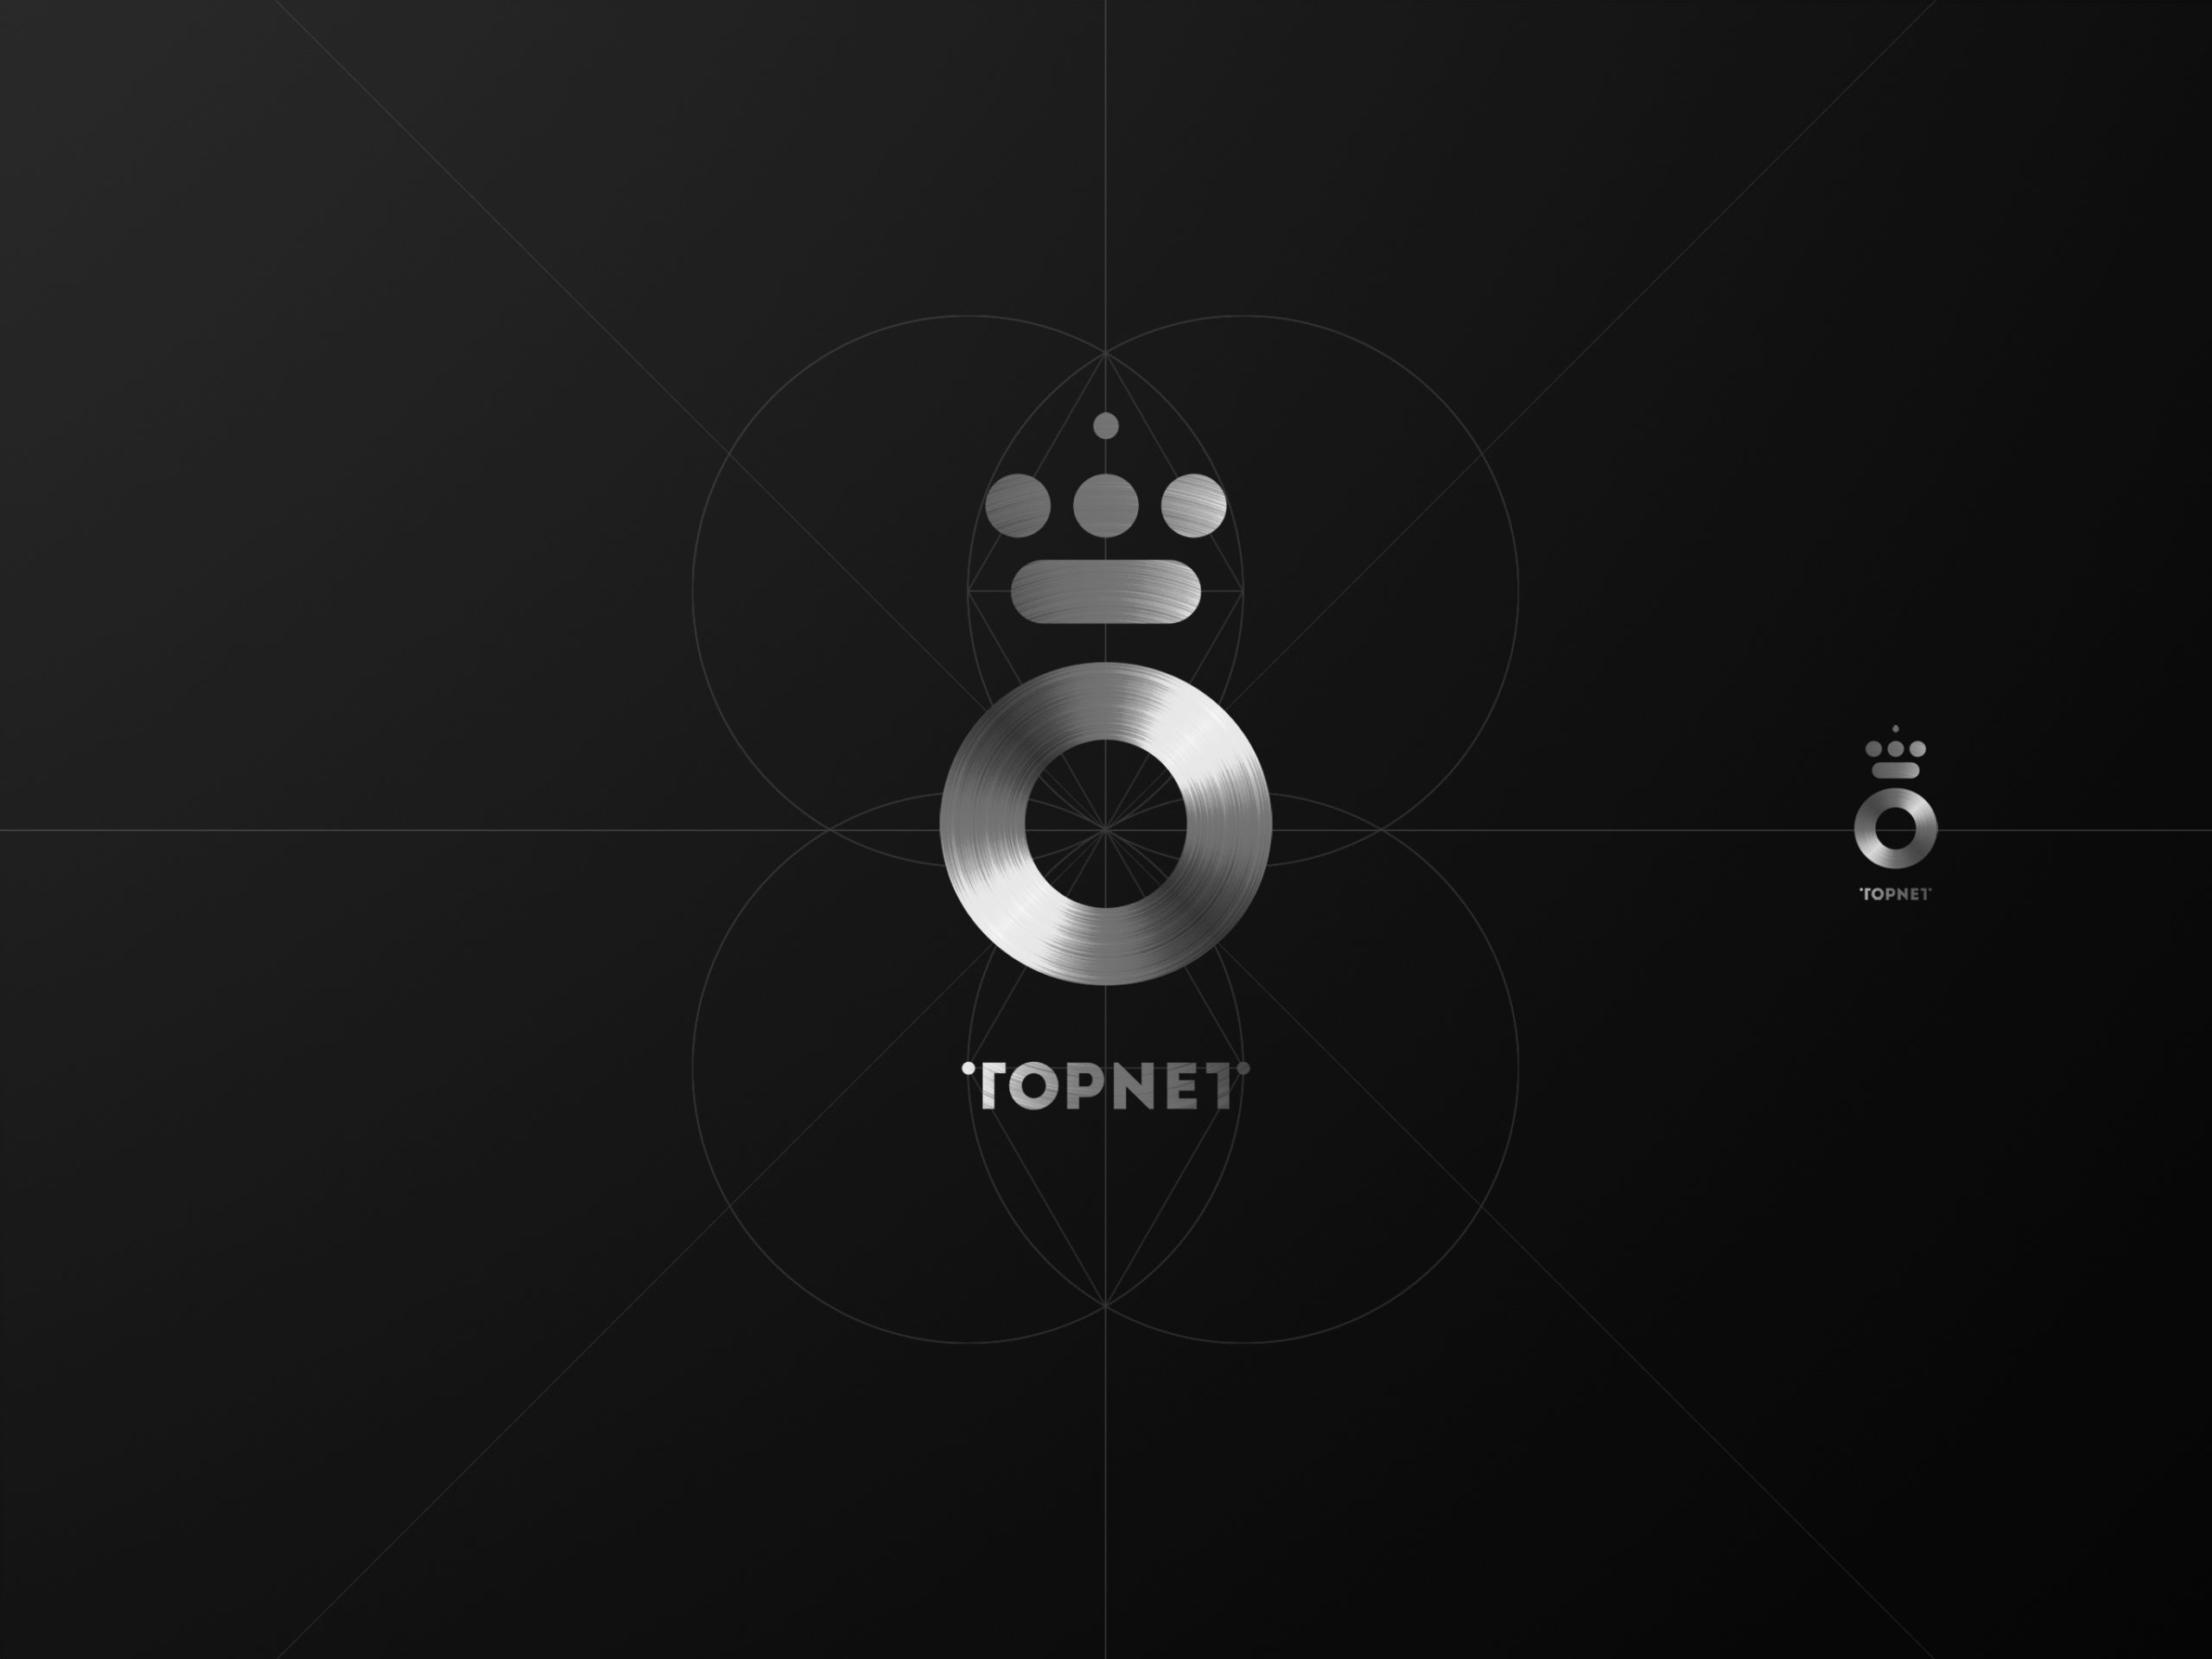 logo TOPNET scaled